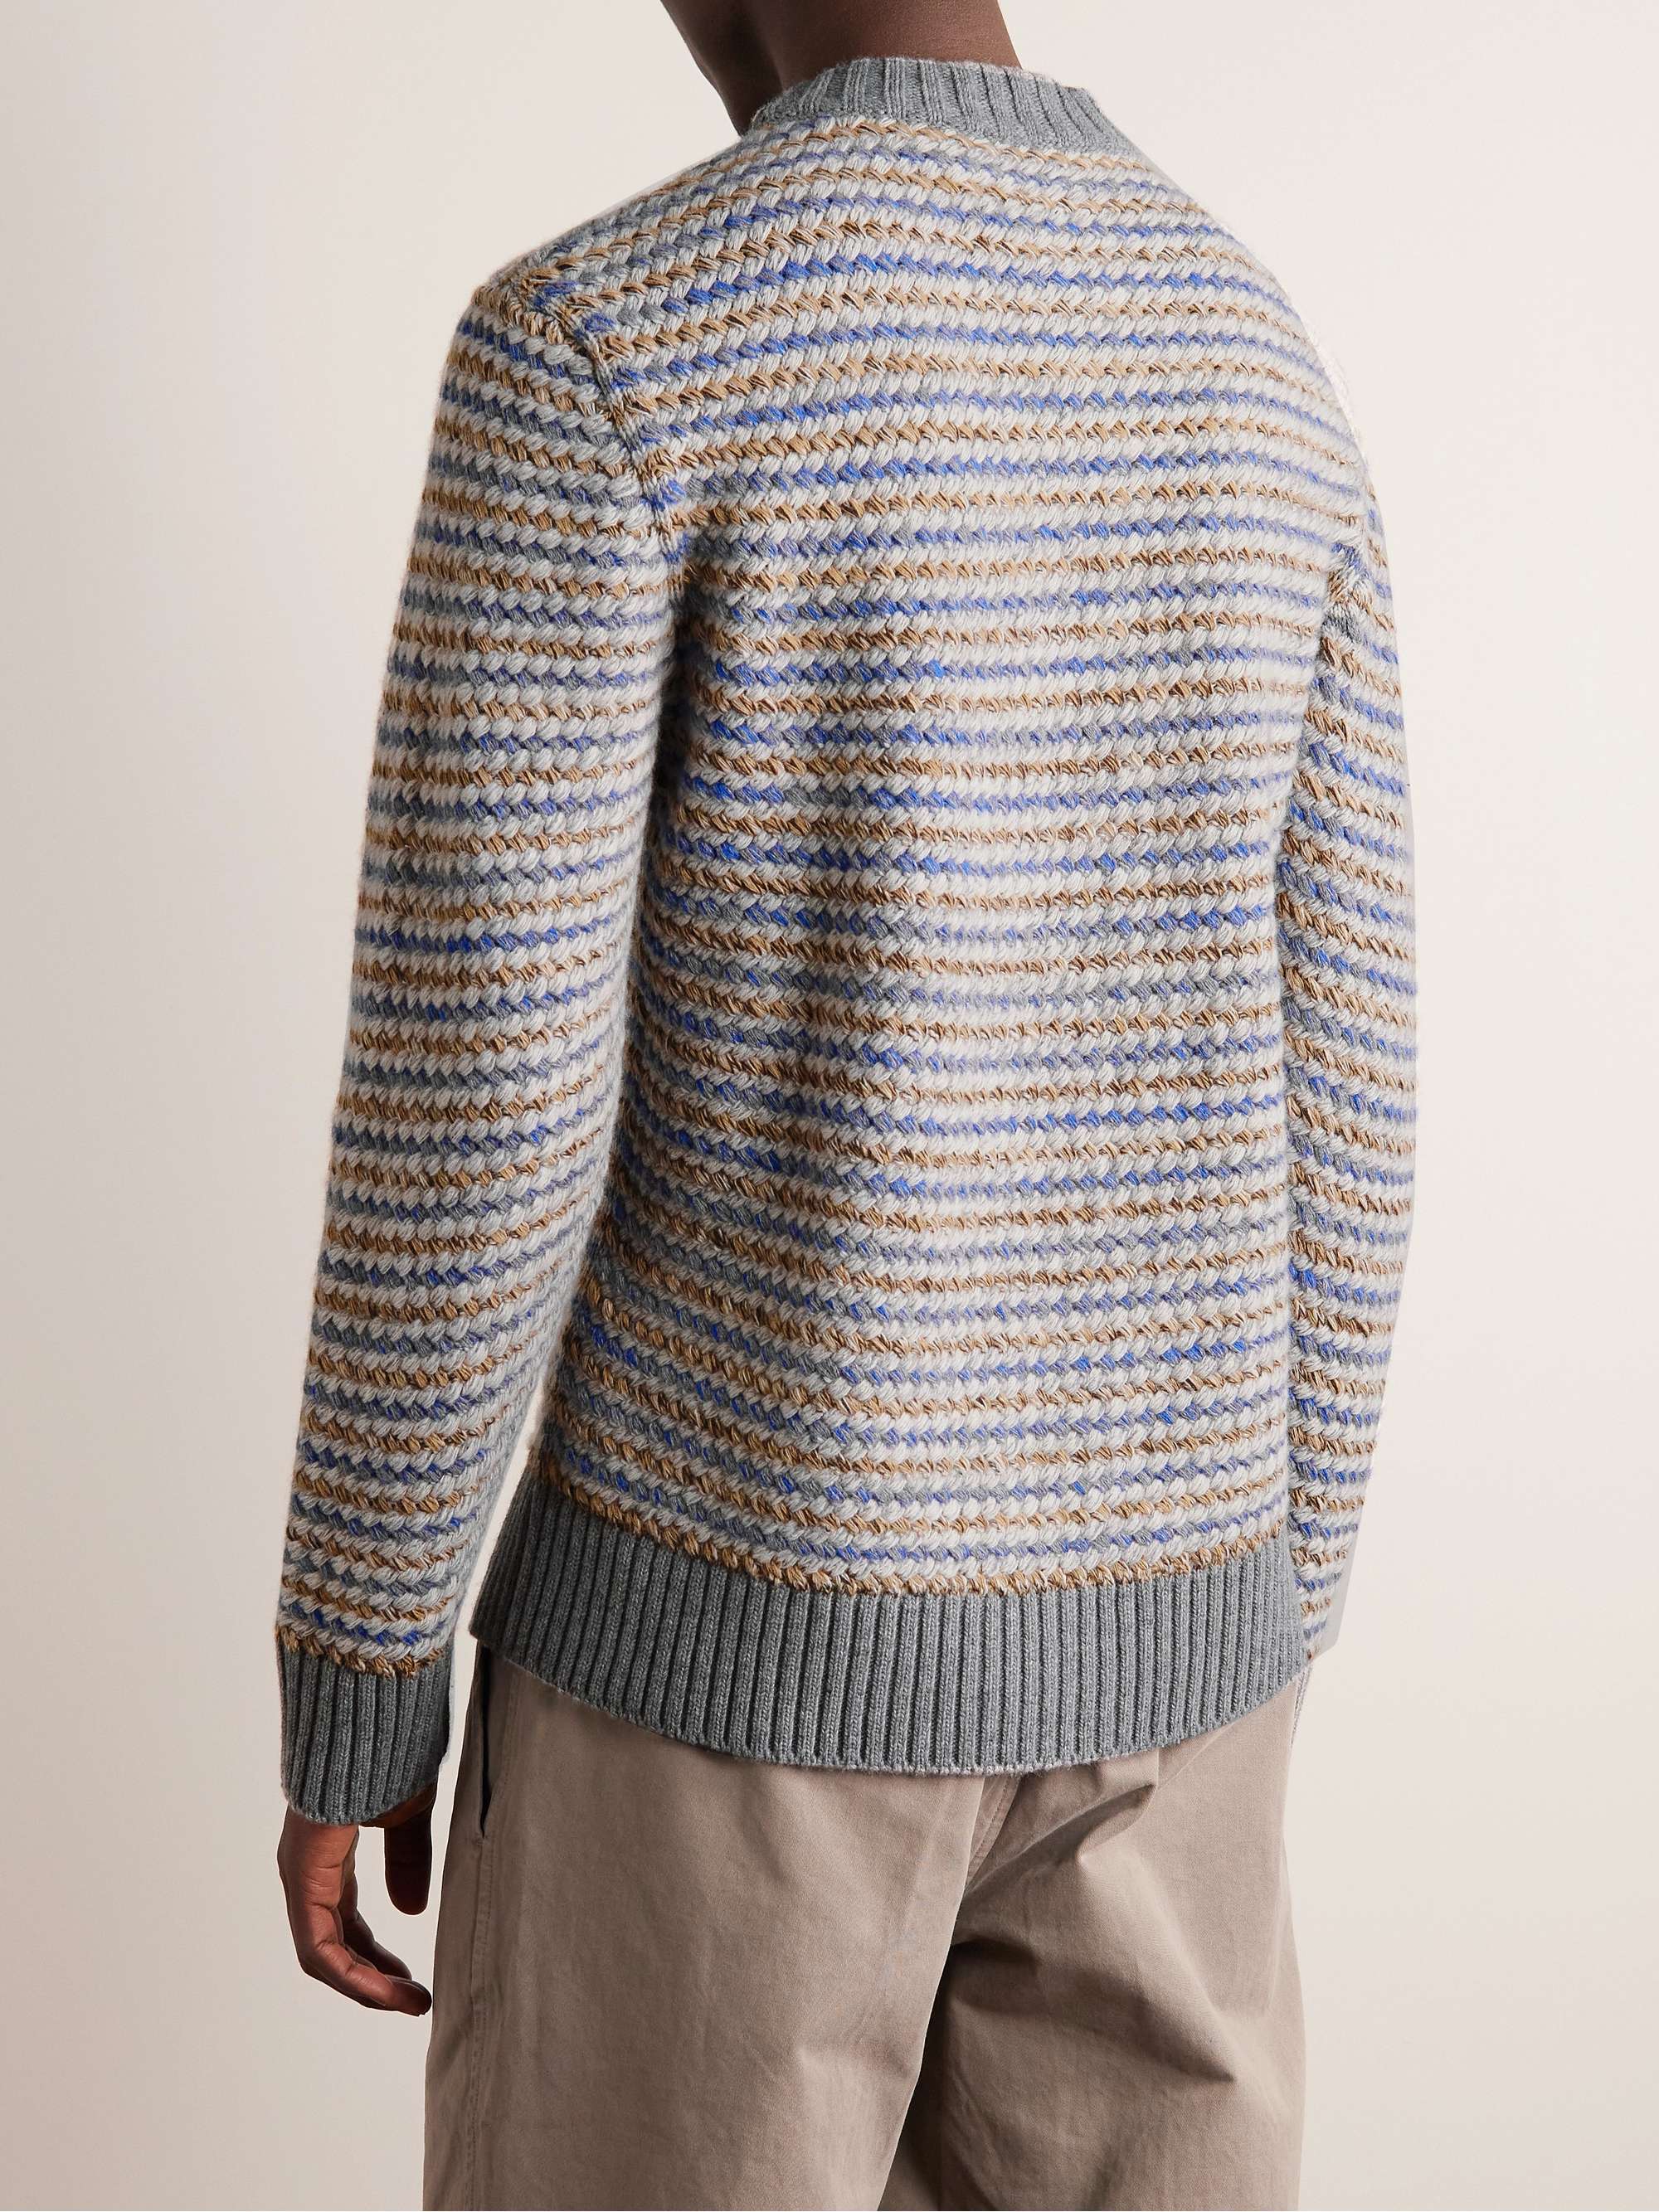 MR P. Striped Merino Wool Jacquard Sweater